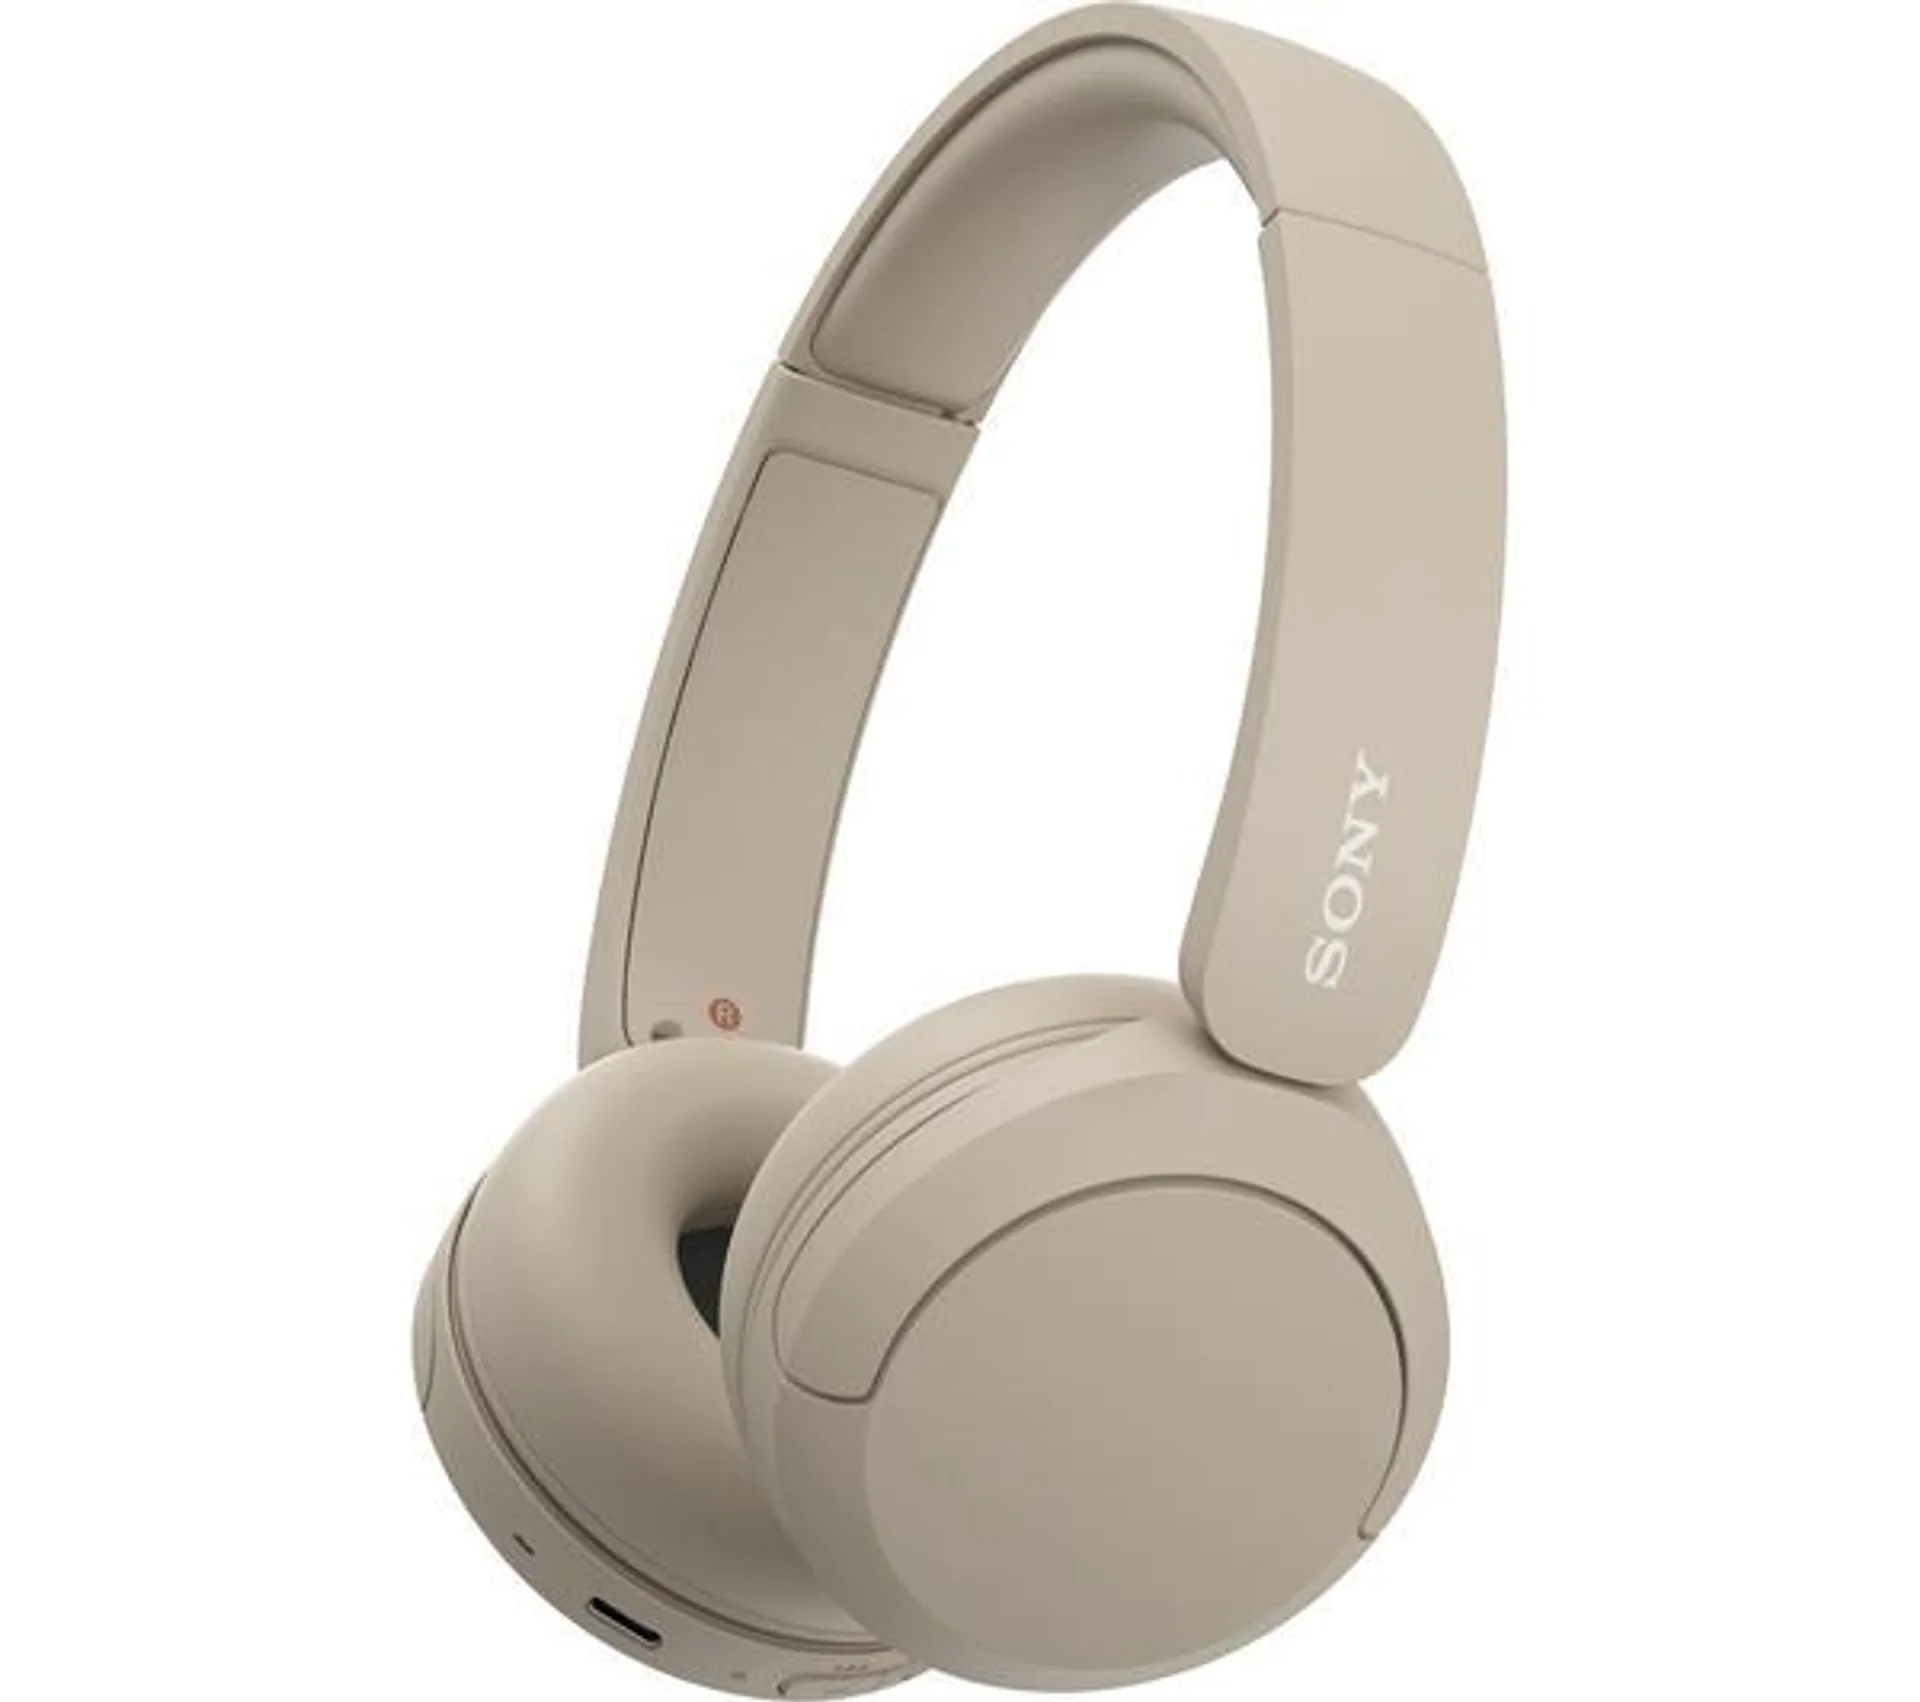 SONY WH-CH520C Wireless Bluetooth Headphones - Beige